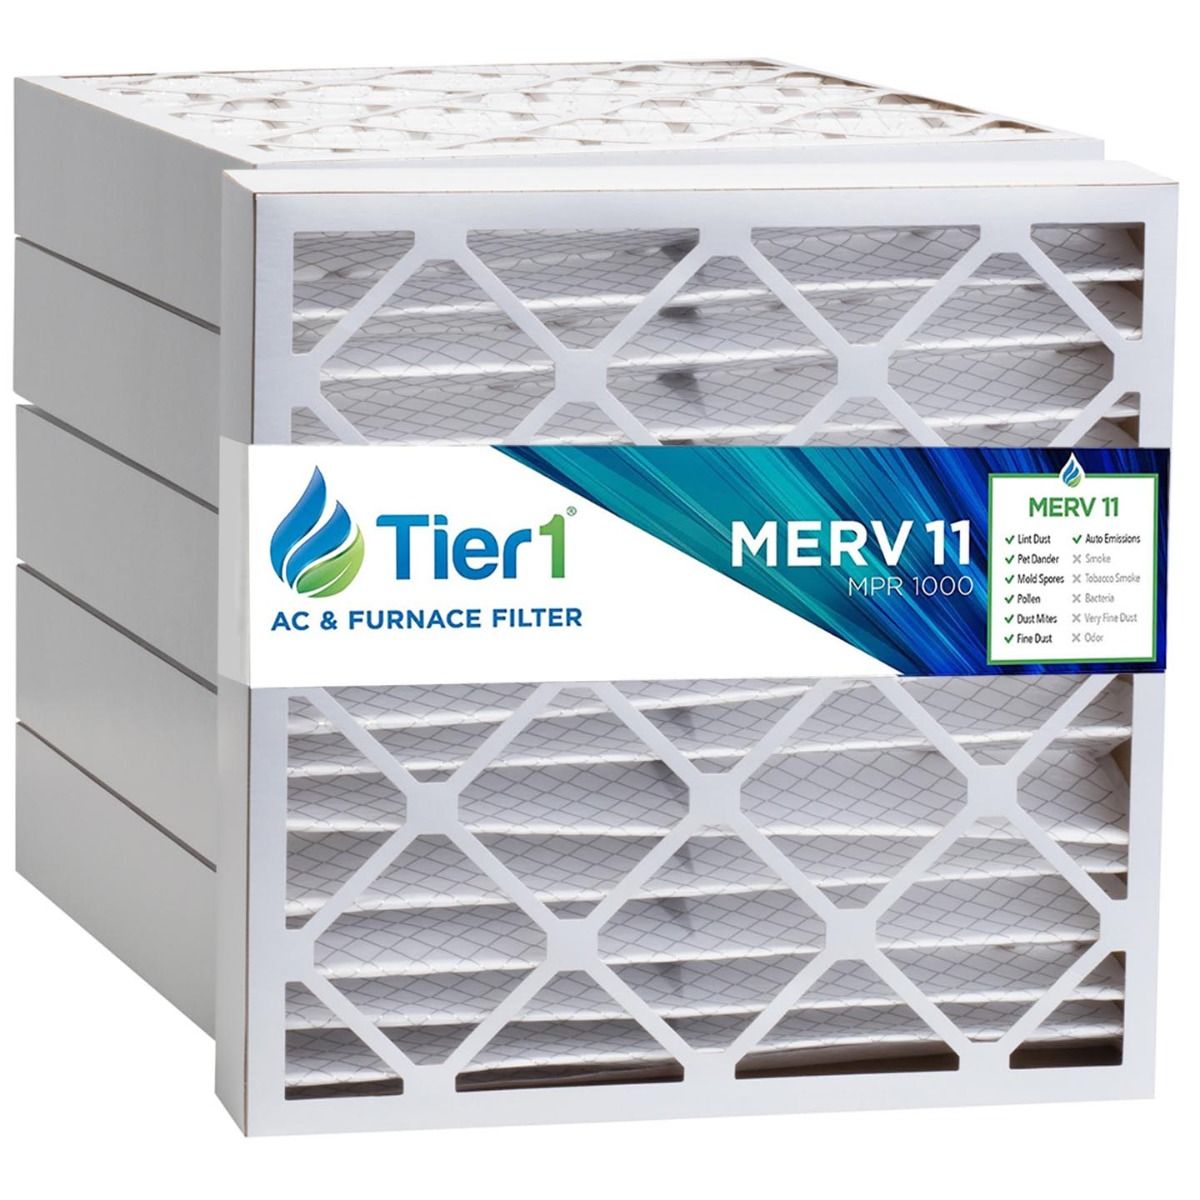 20x20x4 Merv 11 Universal Air Filter By Tier1